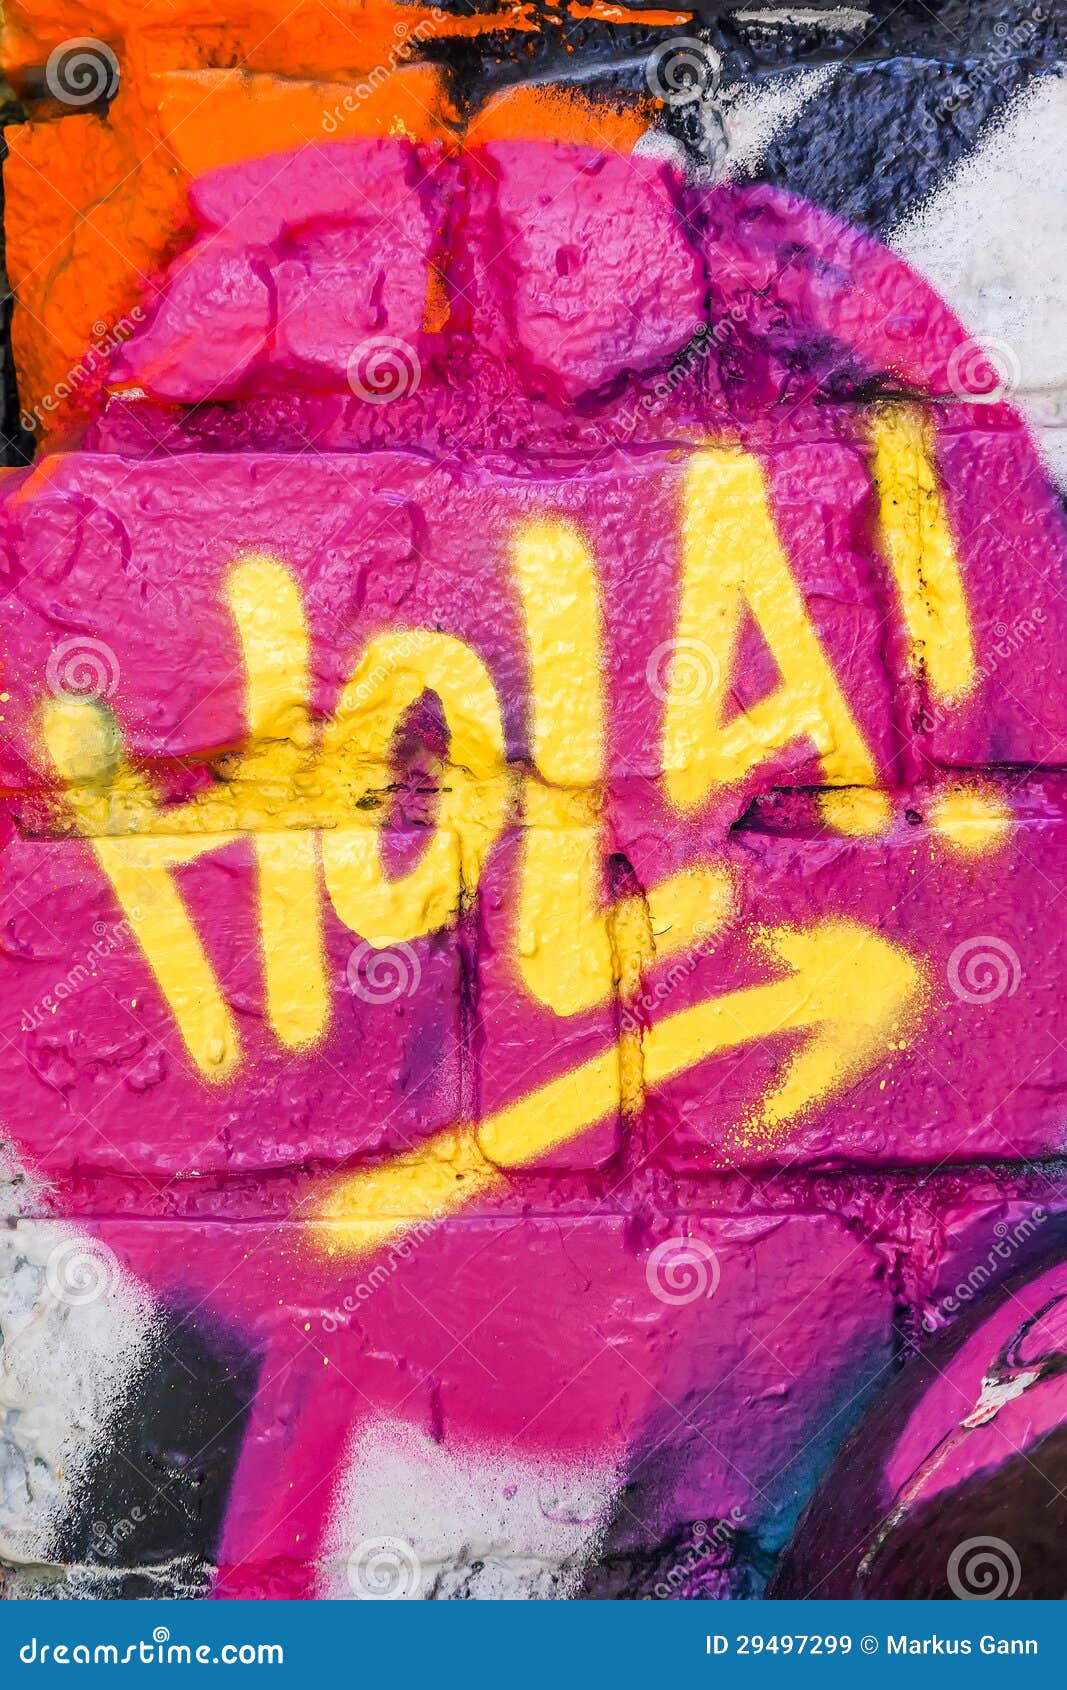 graffiti word hola